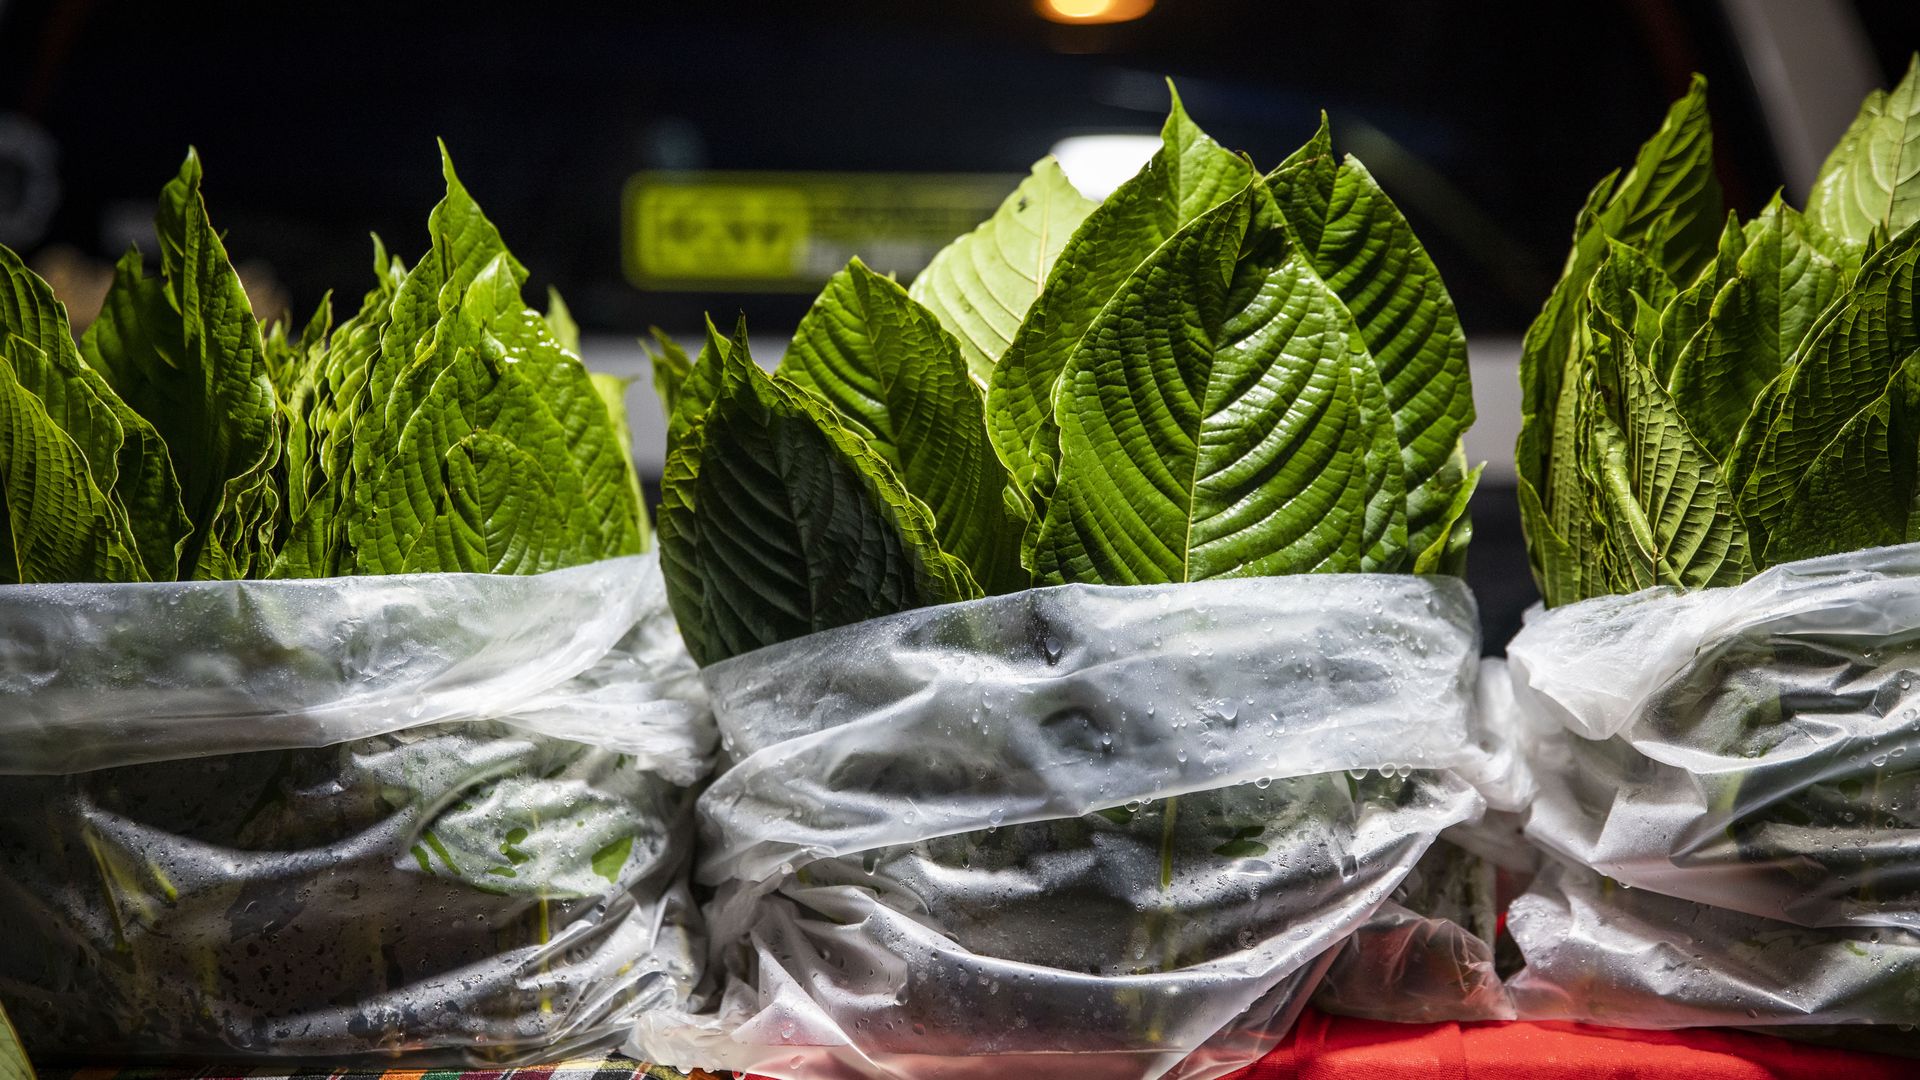 Large green kratom leaves in translucent cellophane bags